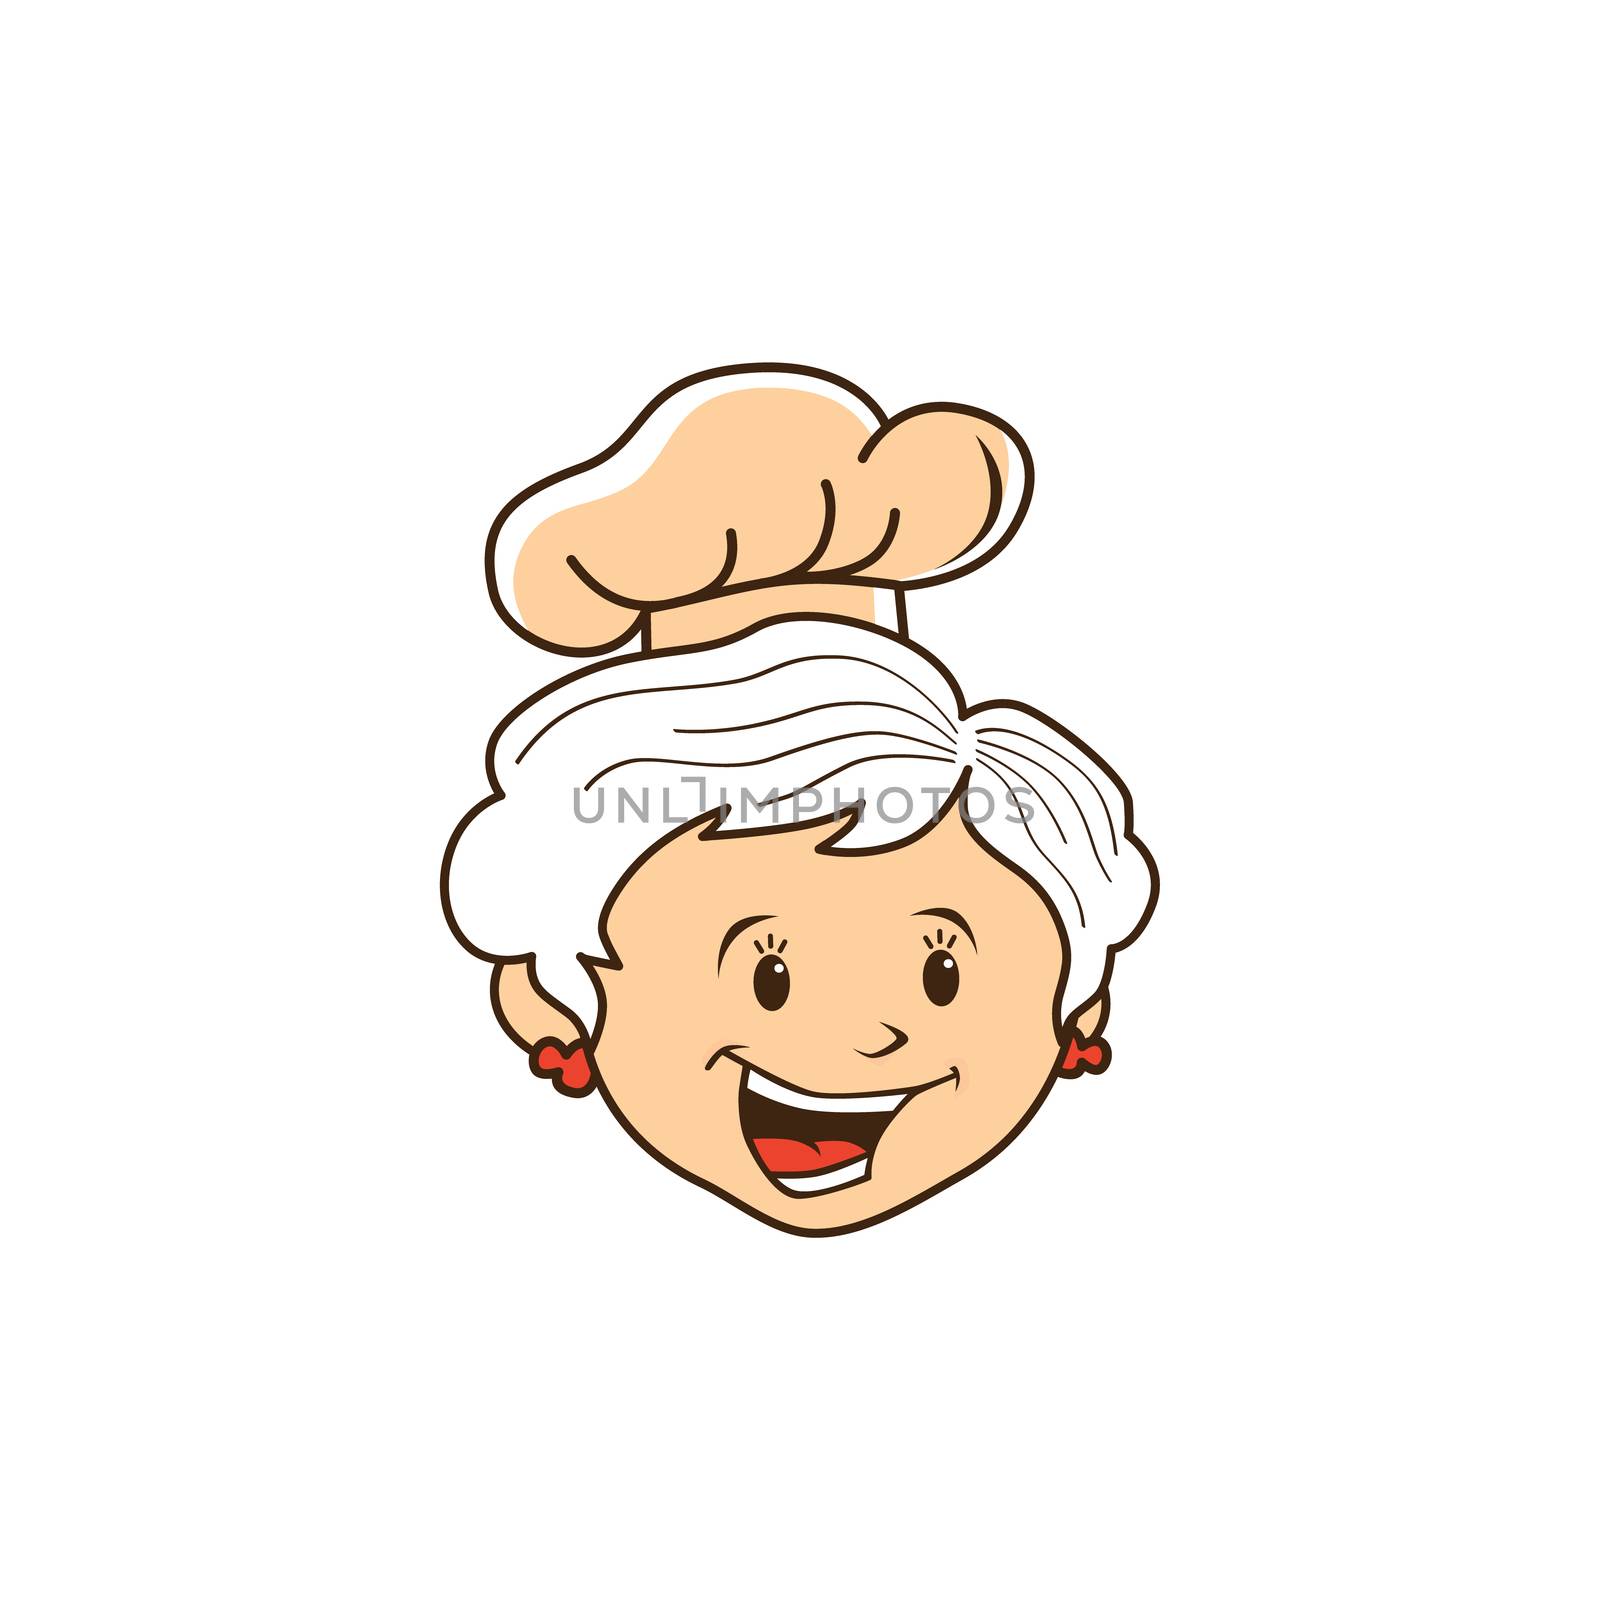 grandma chef cartoon by vector1st